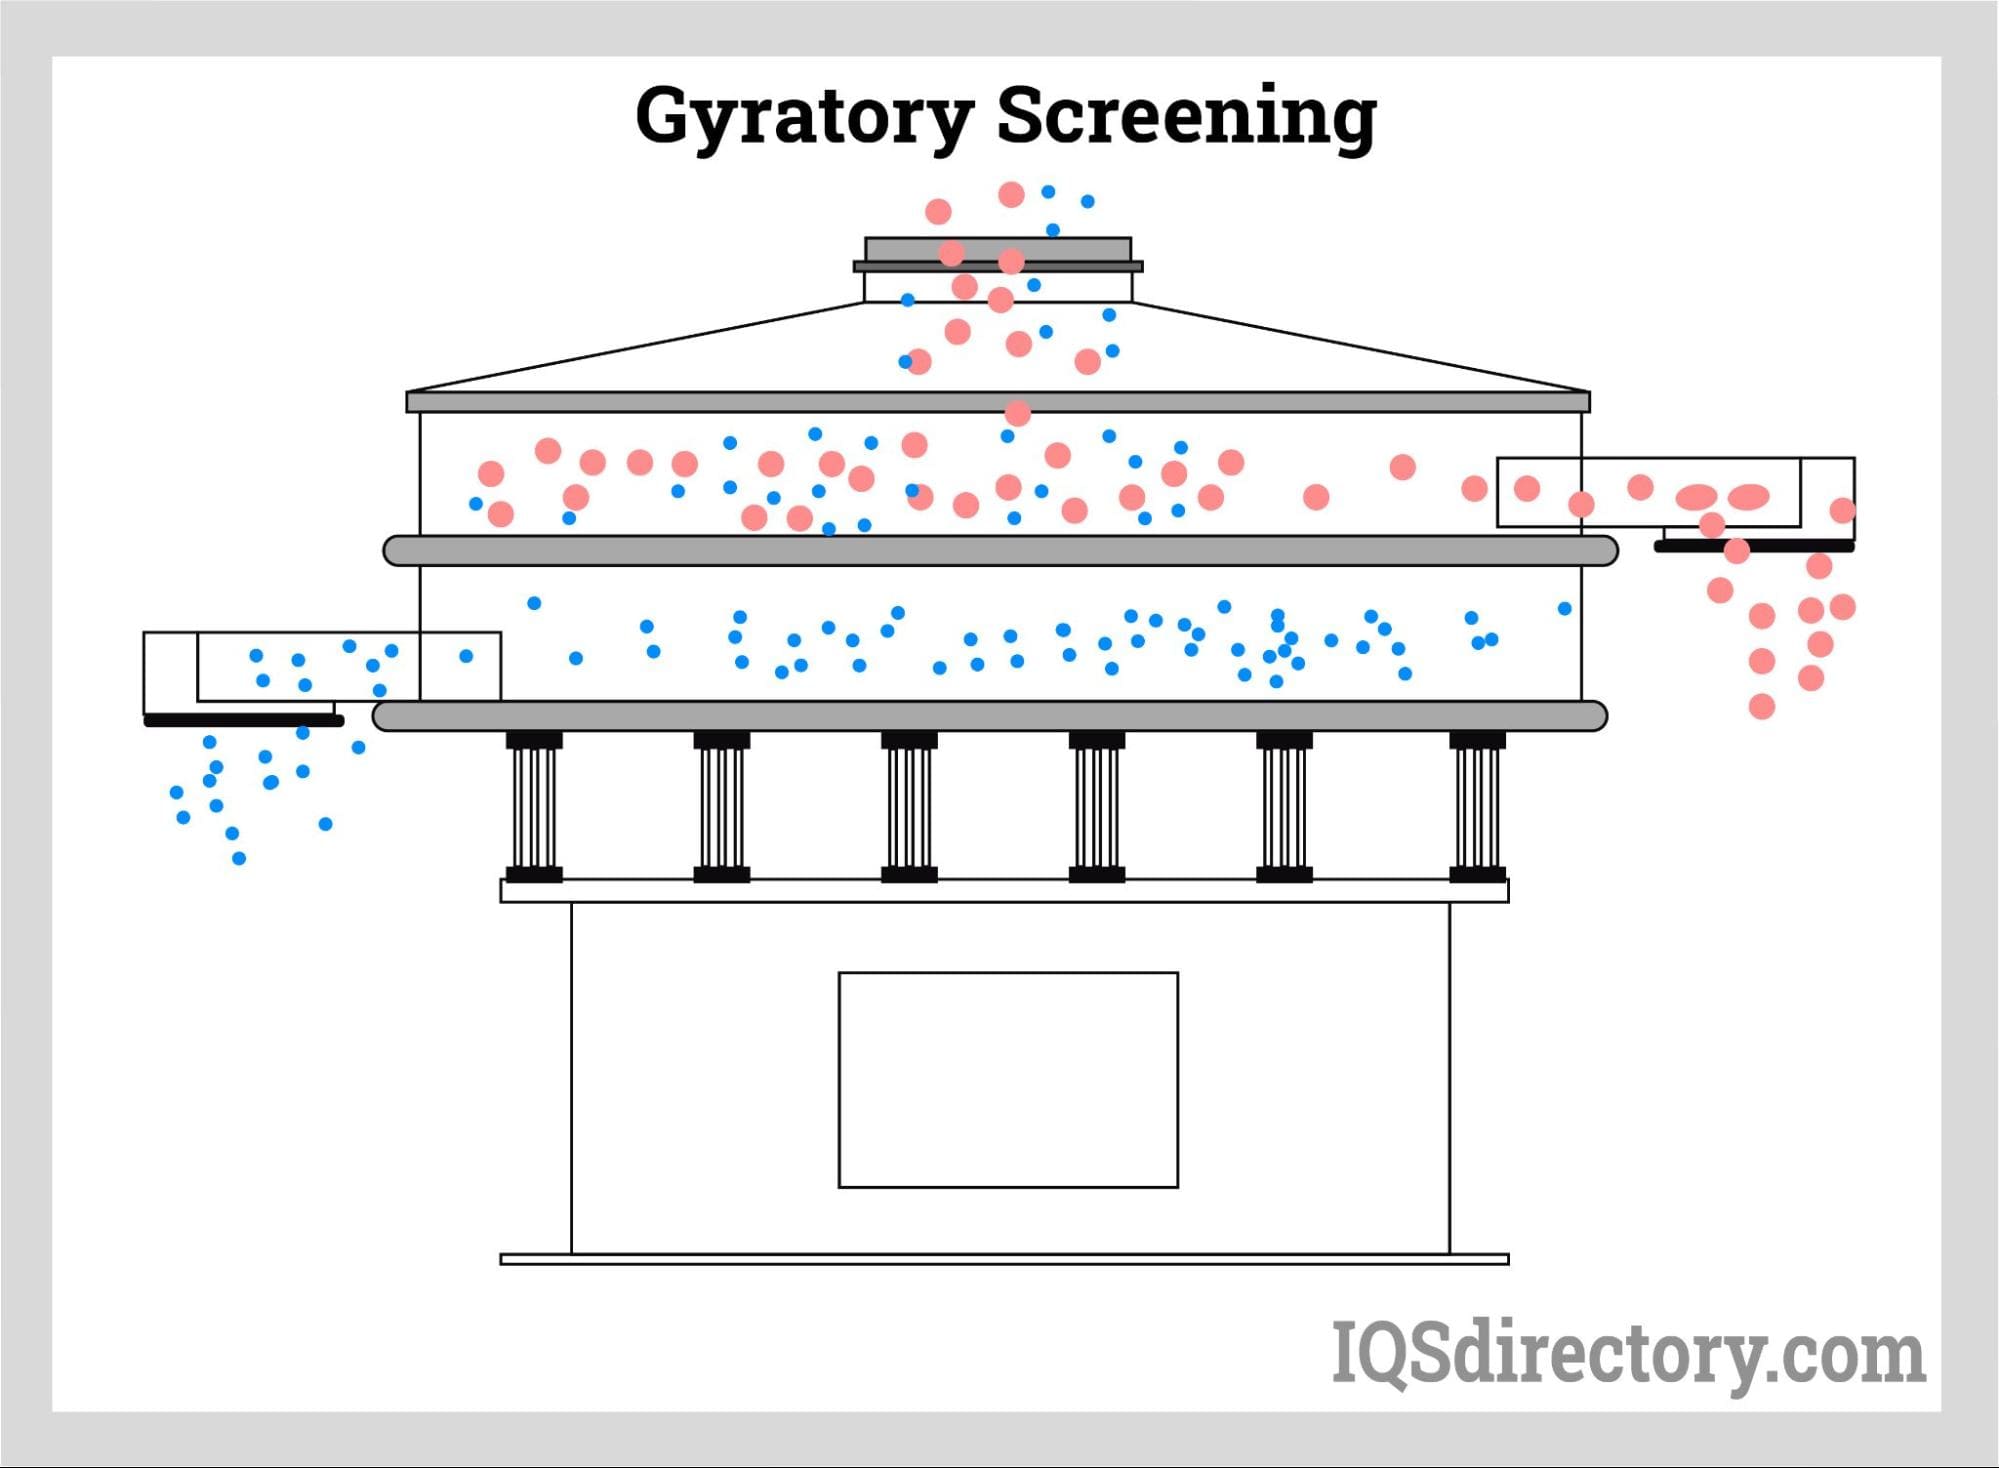 Gyratory Screening